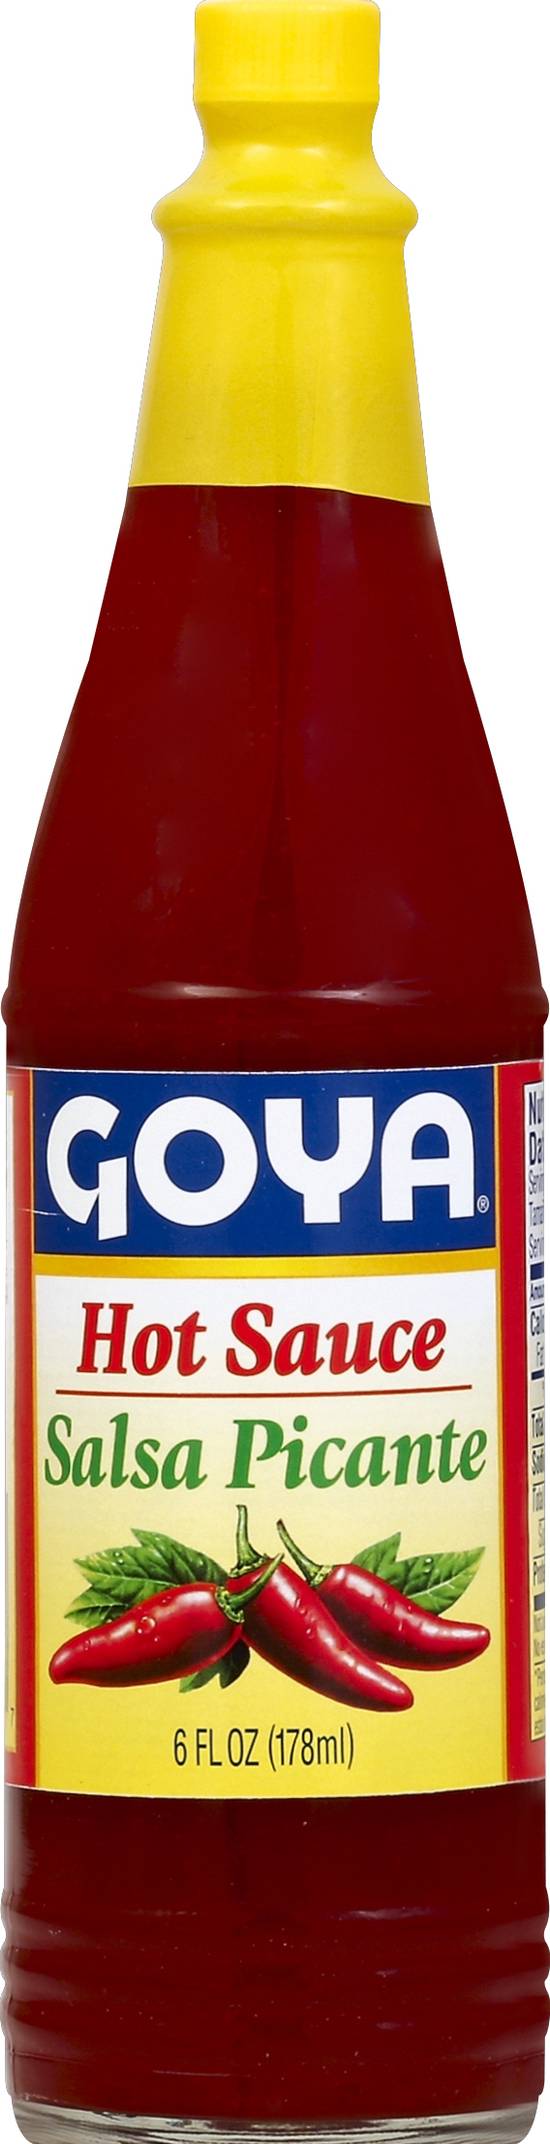 Goya Salsa Picante Hot Sauce